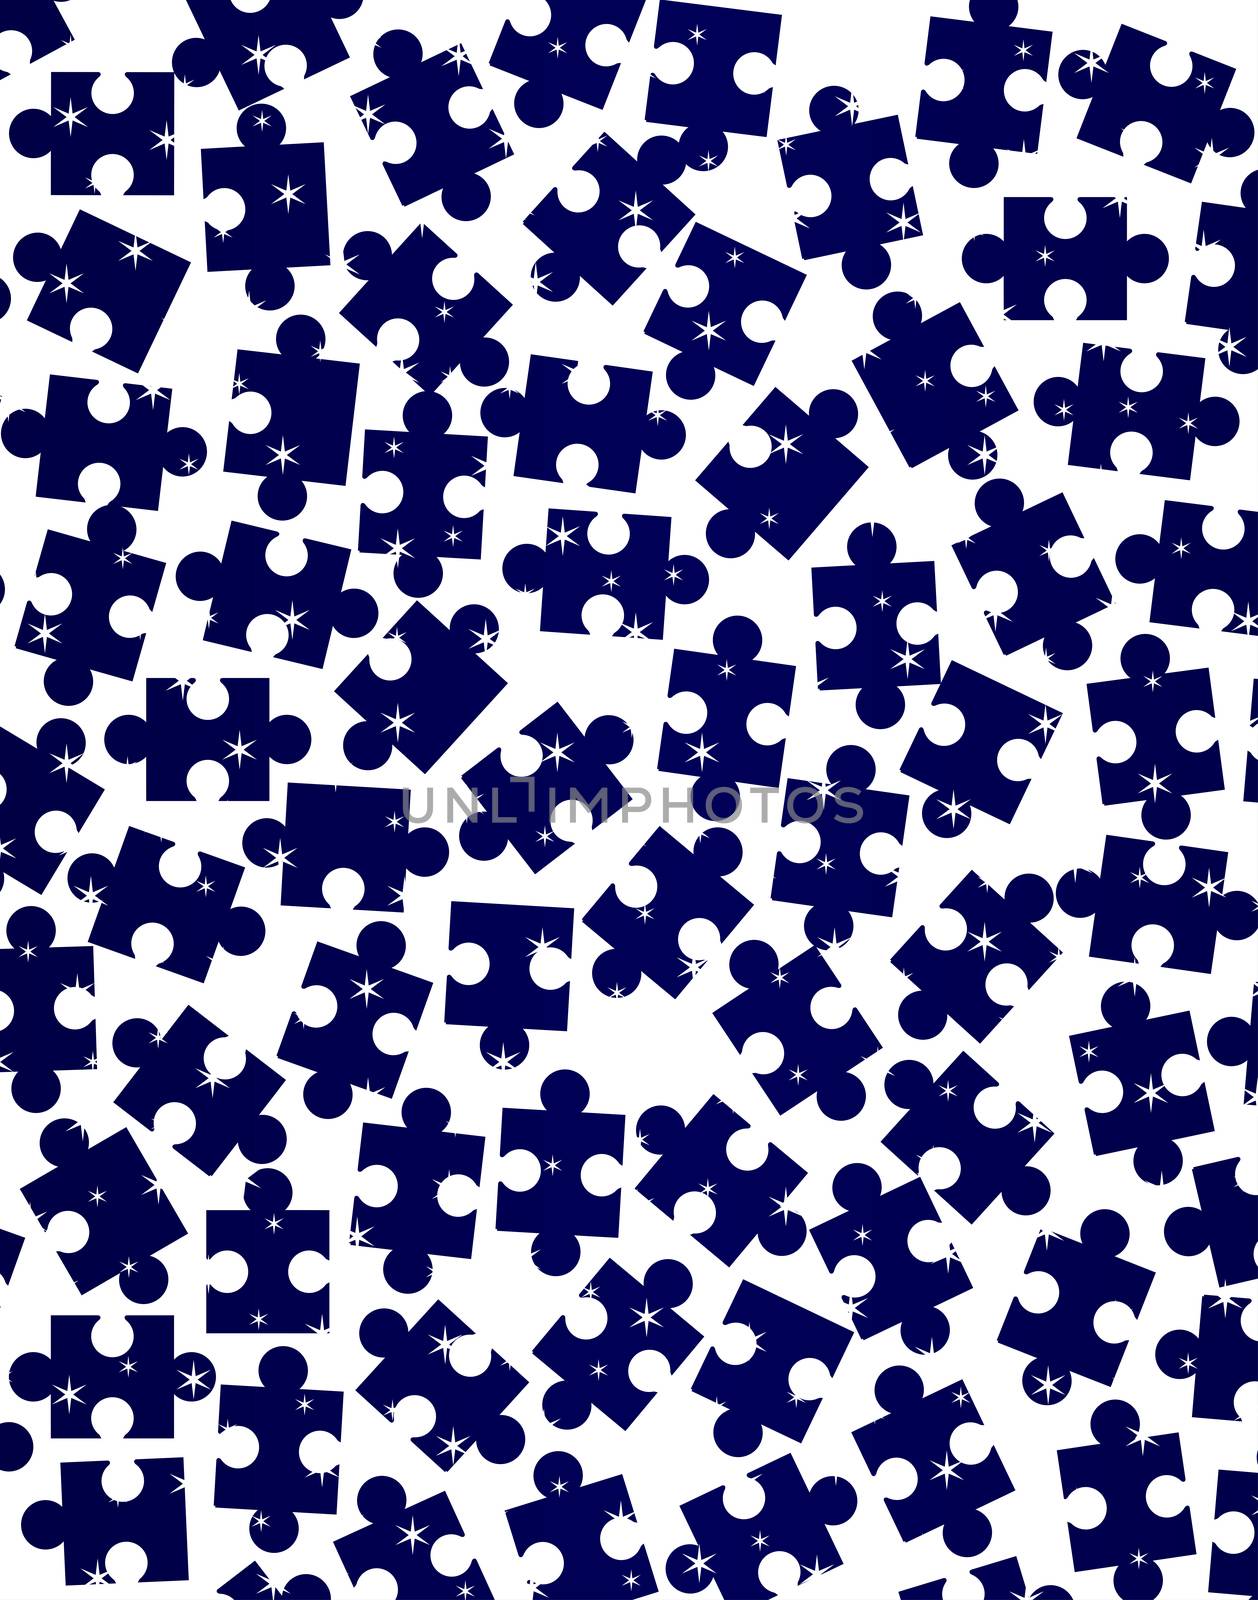 Random Jigsaw Pieces by Bigalbaloo